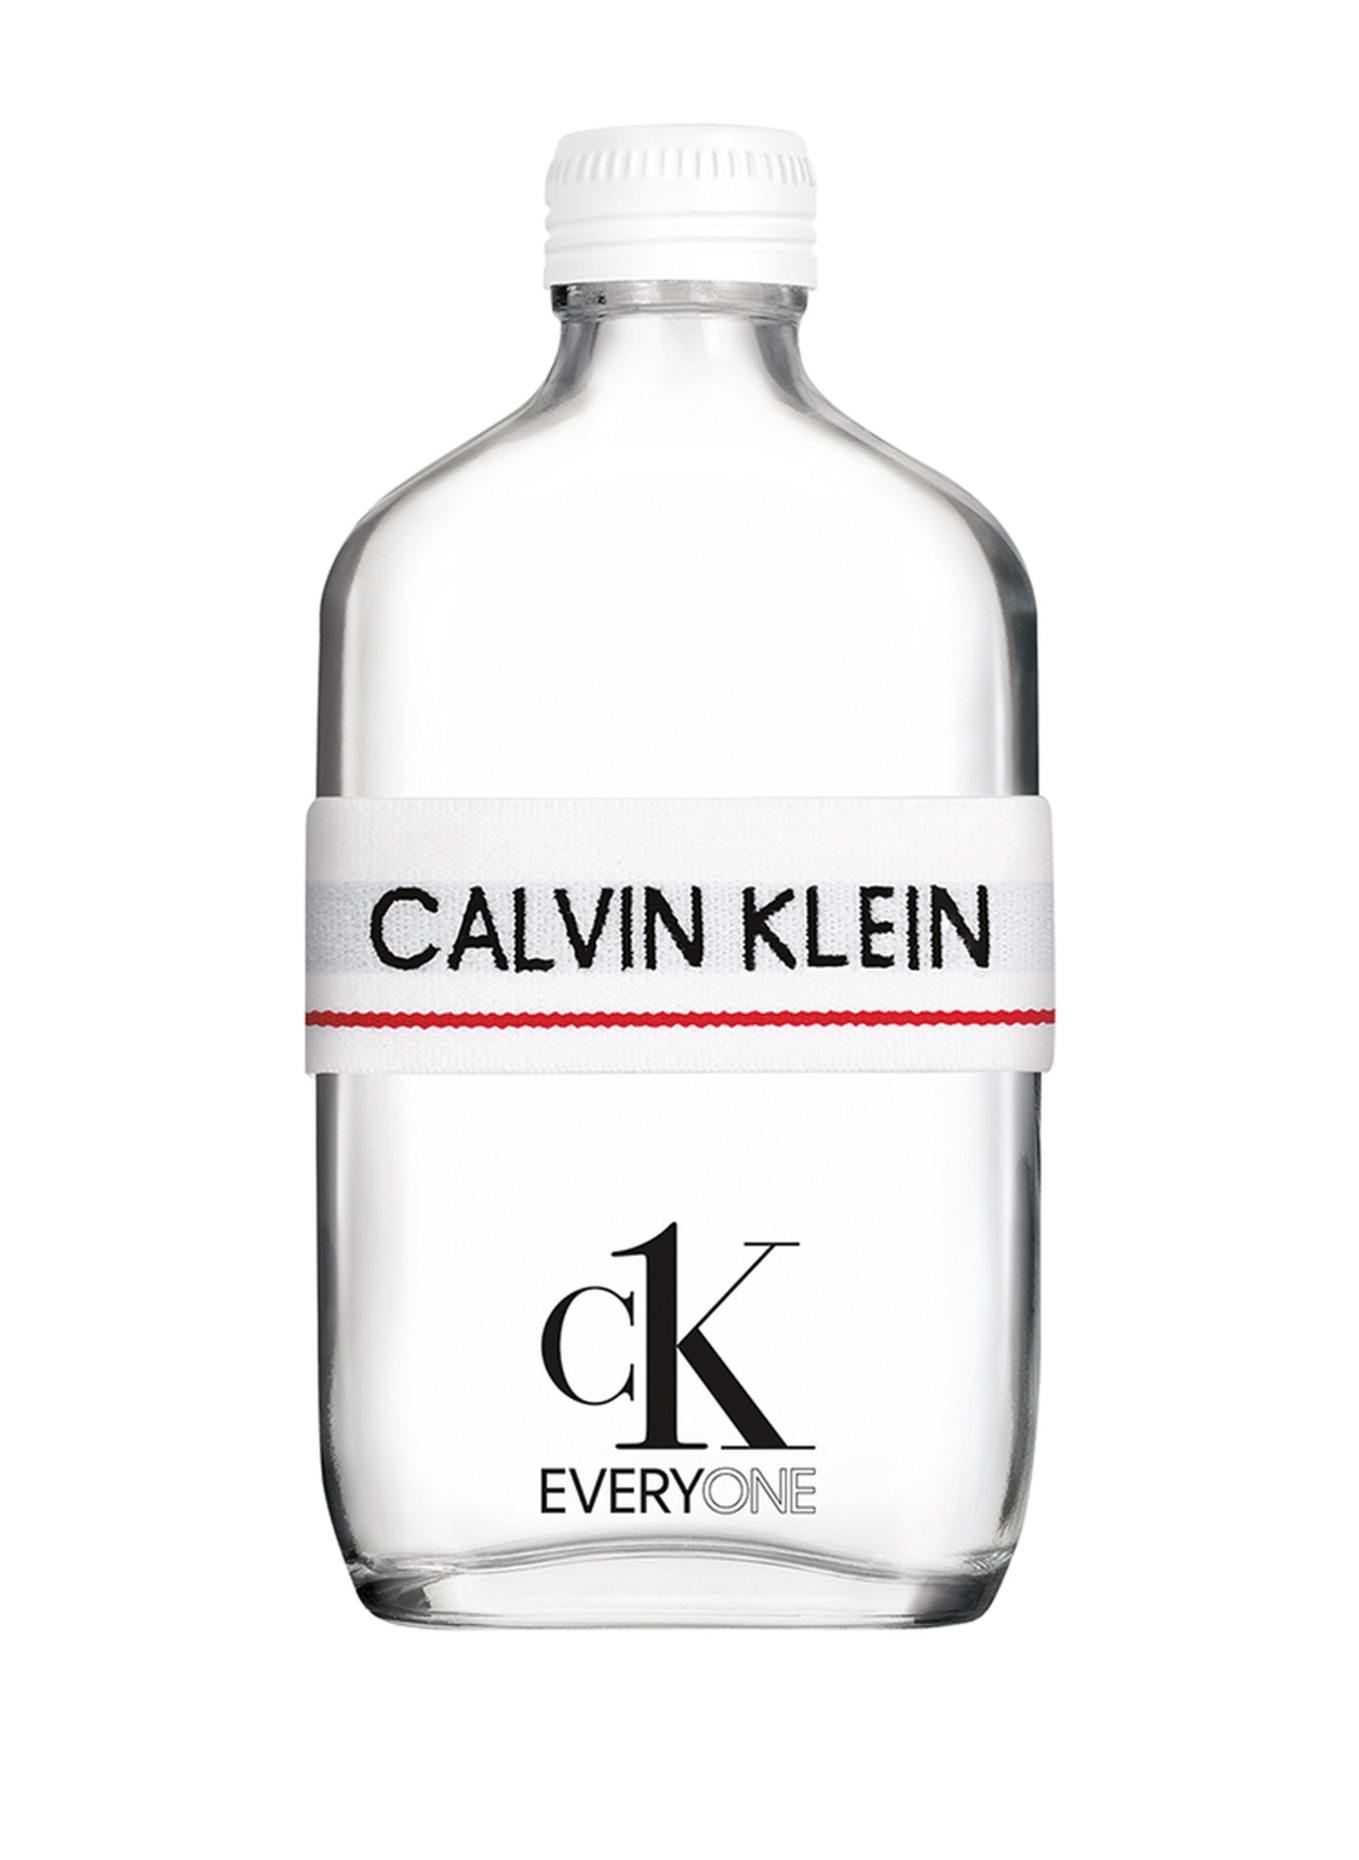 Calvin Klein CK EVERYONE (Obrázek 1)